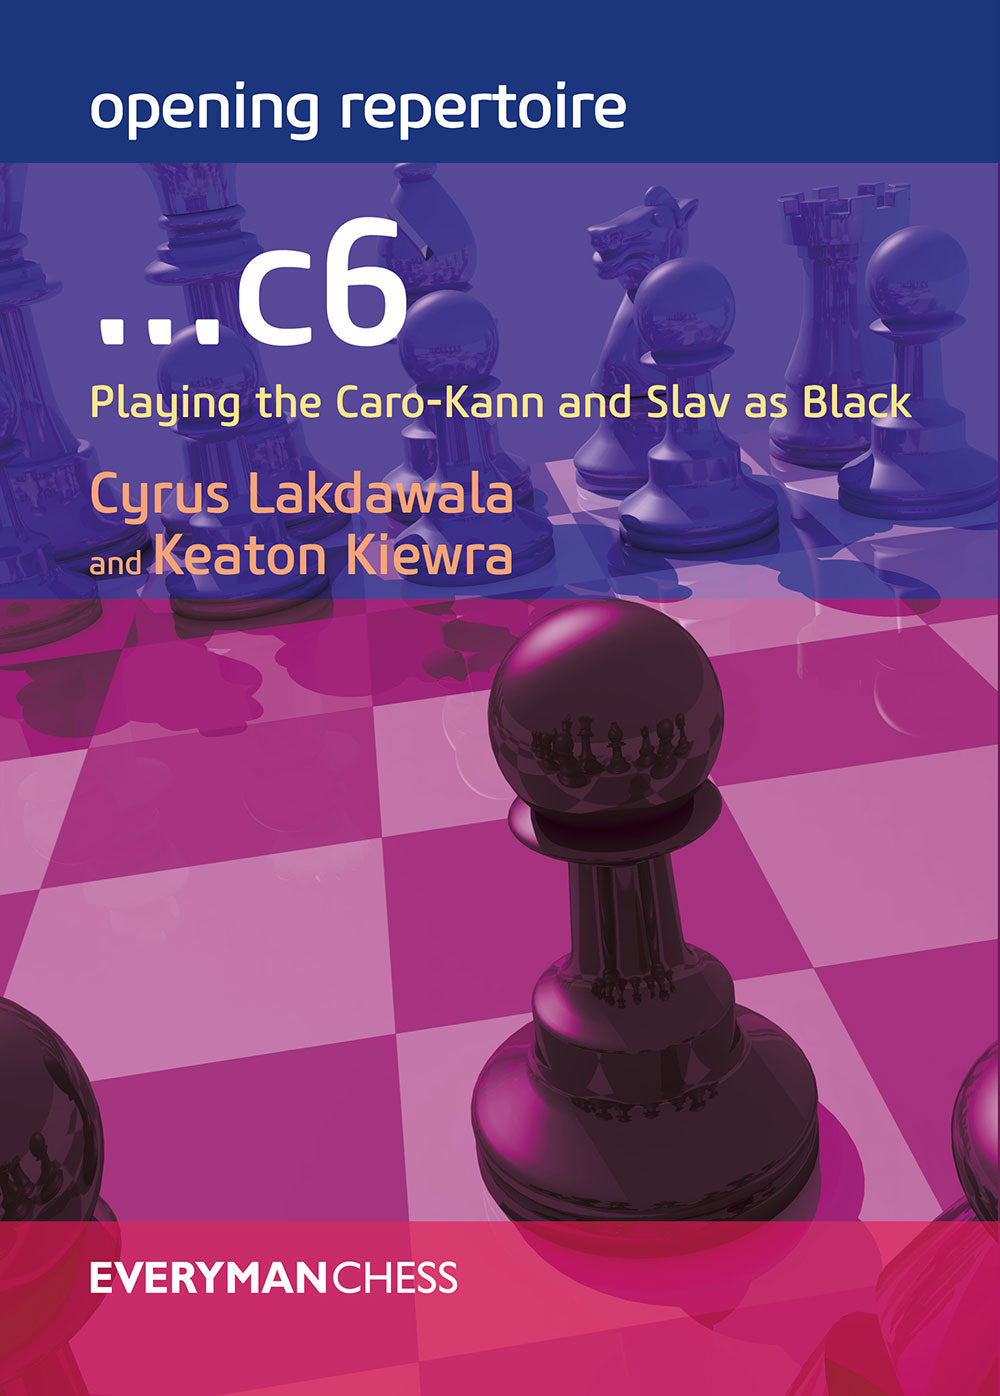 Cramping the Caro-Kann - With Grandmaster So's 1 e4 - Chessable Blog